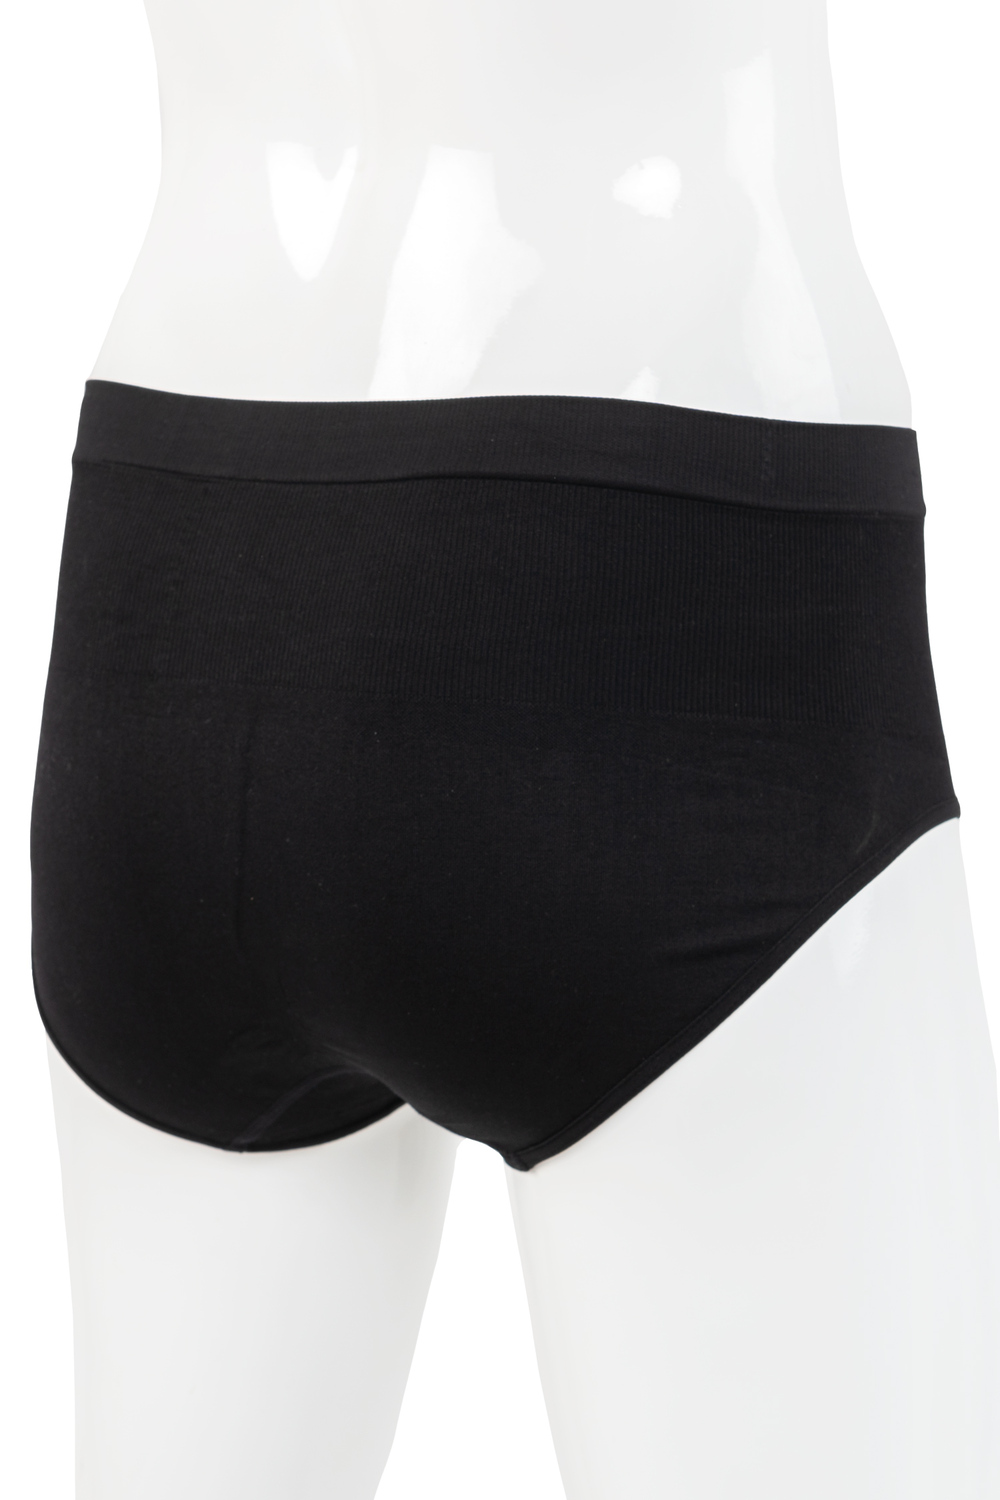 Seamless boyleg panty with light support - Black. Colour: black